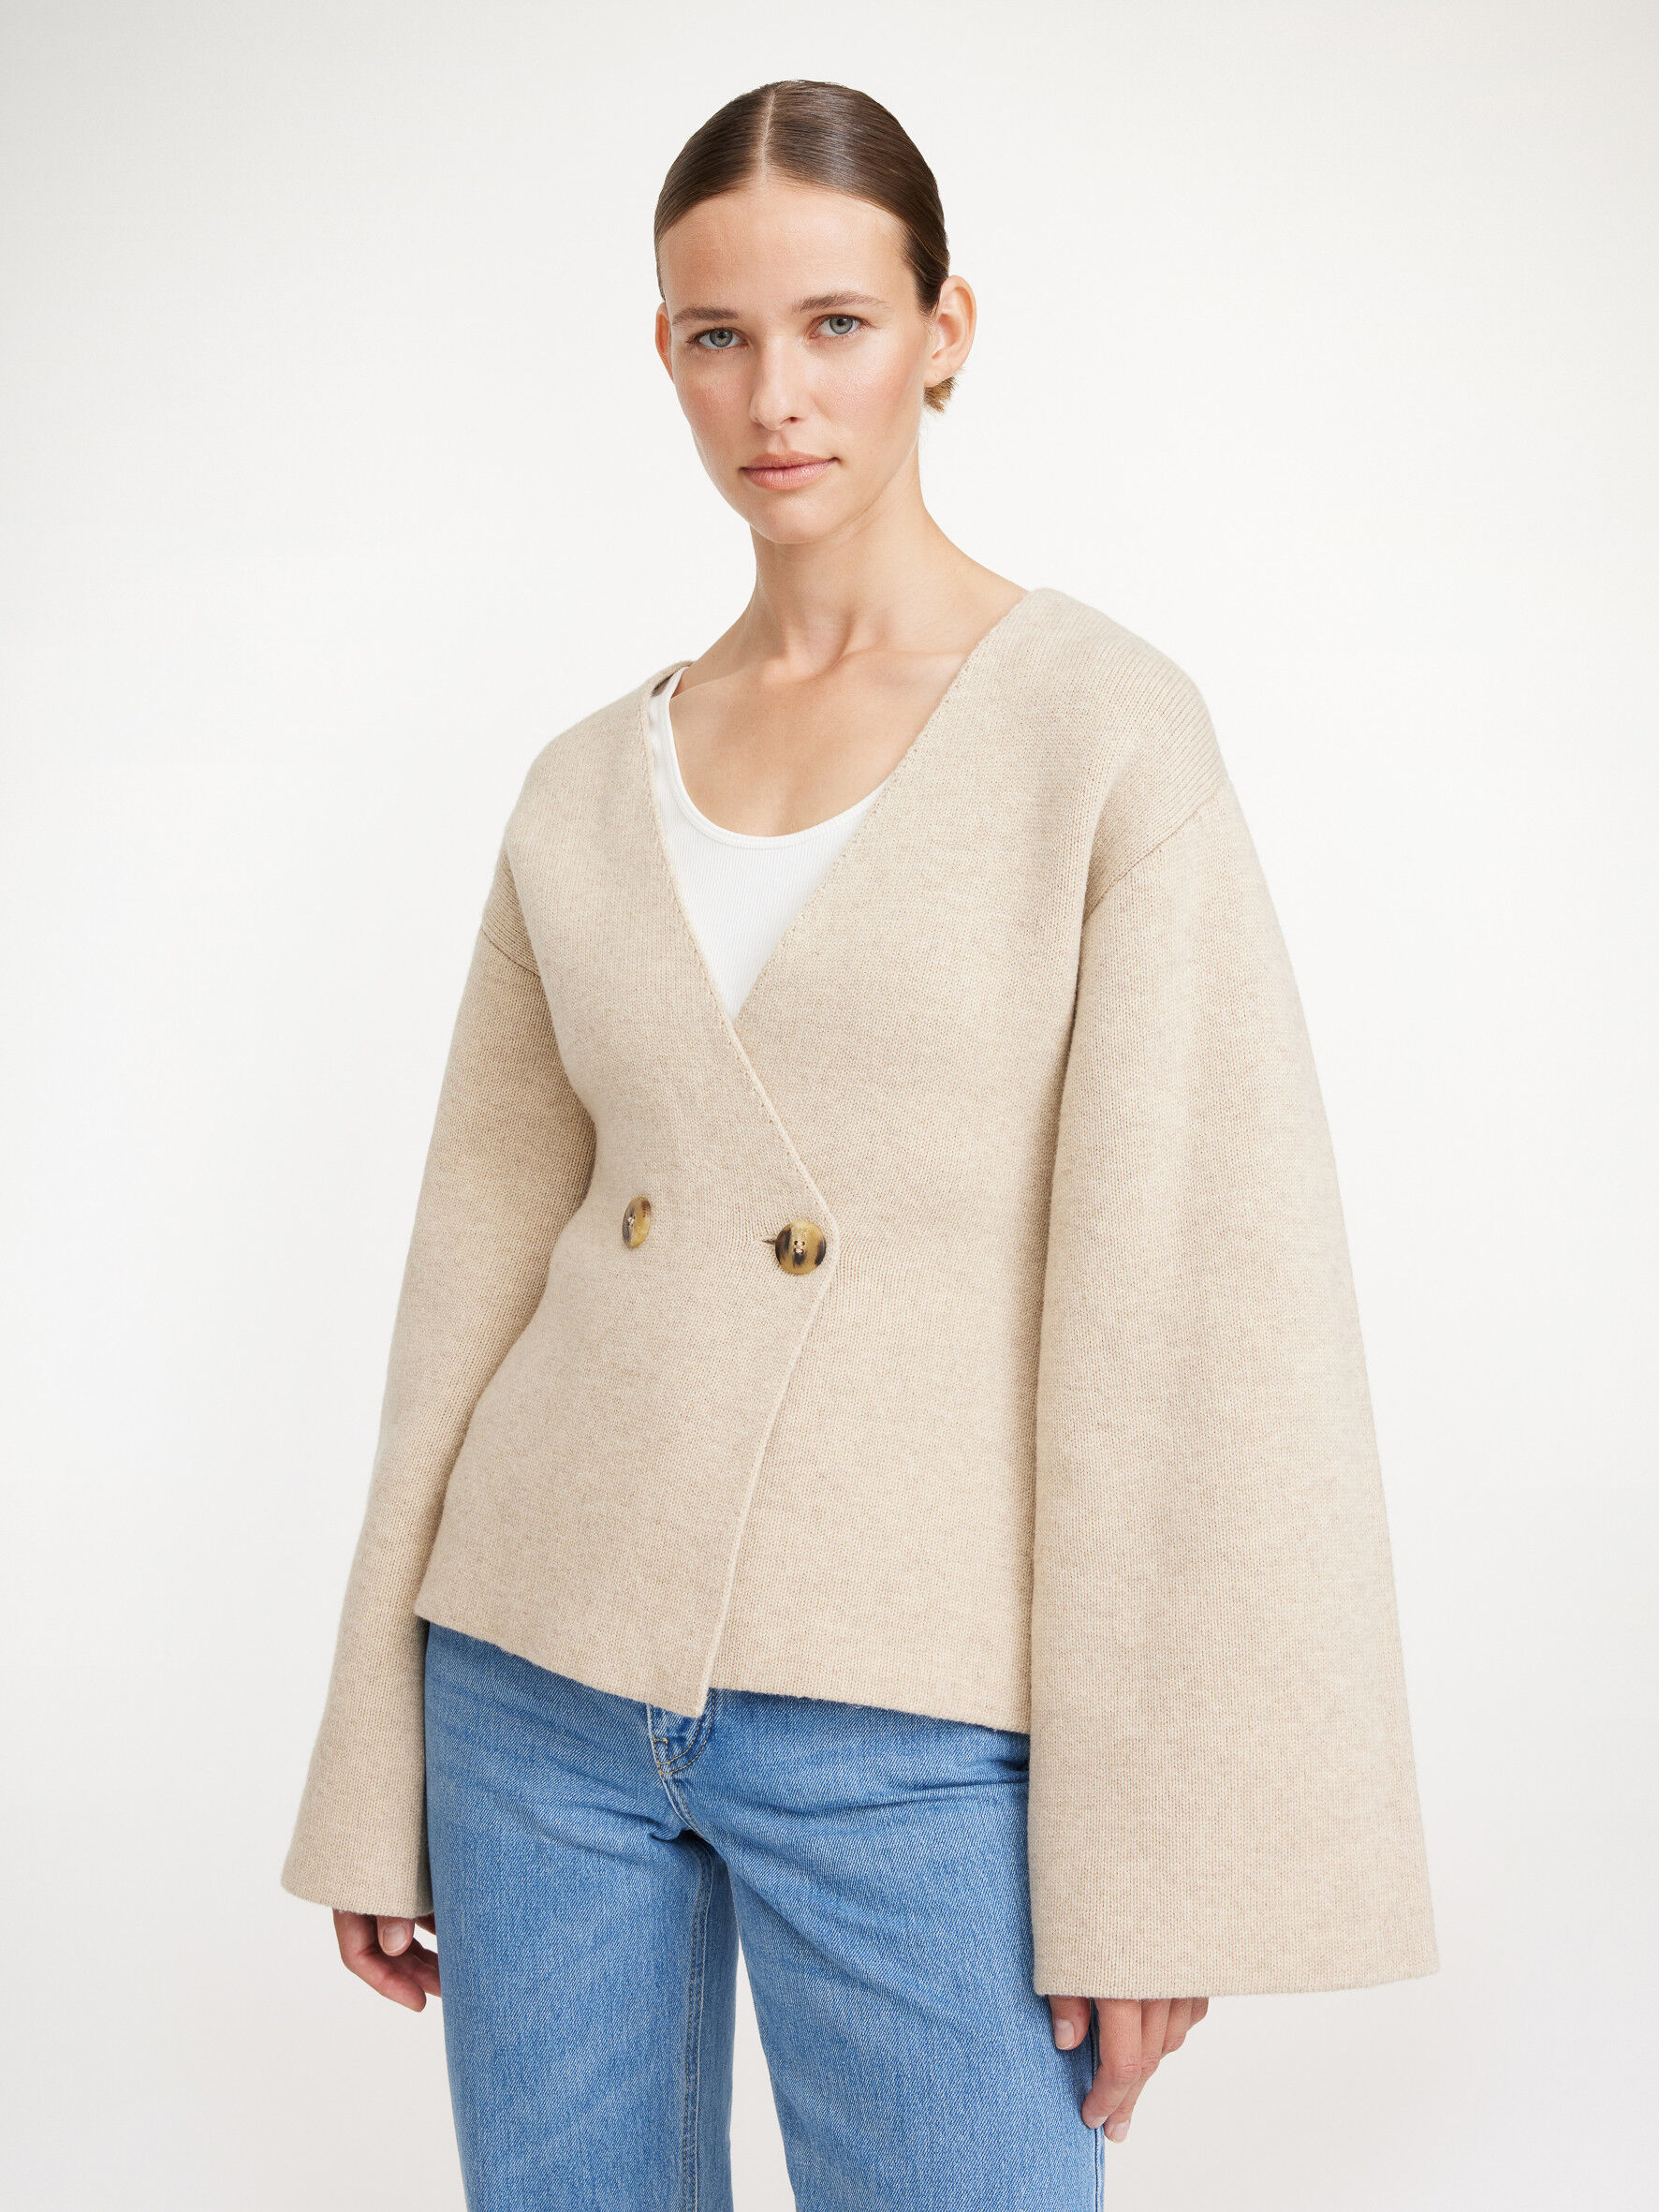 Tinley wool cardigan - Buy Clothing online